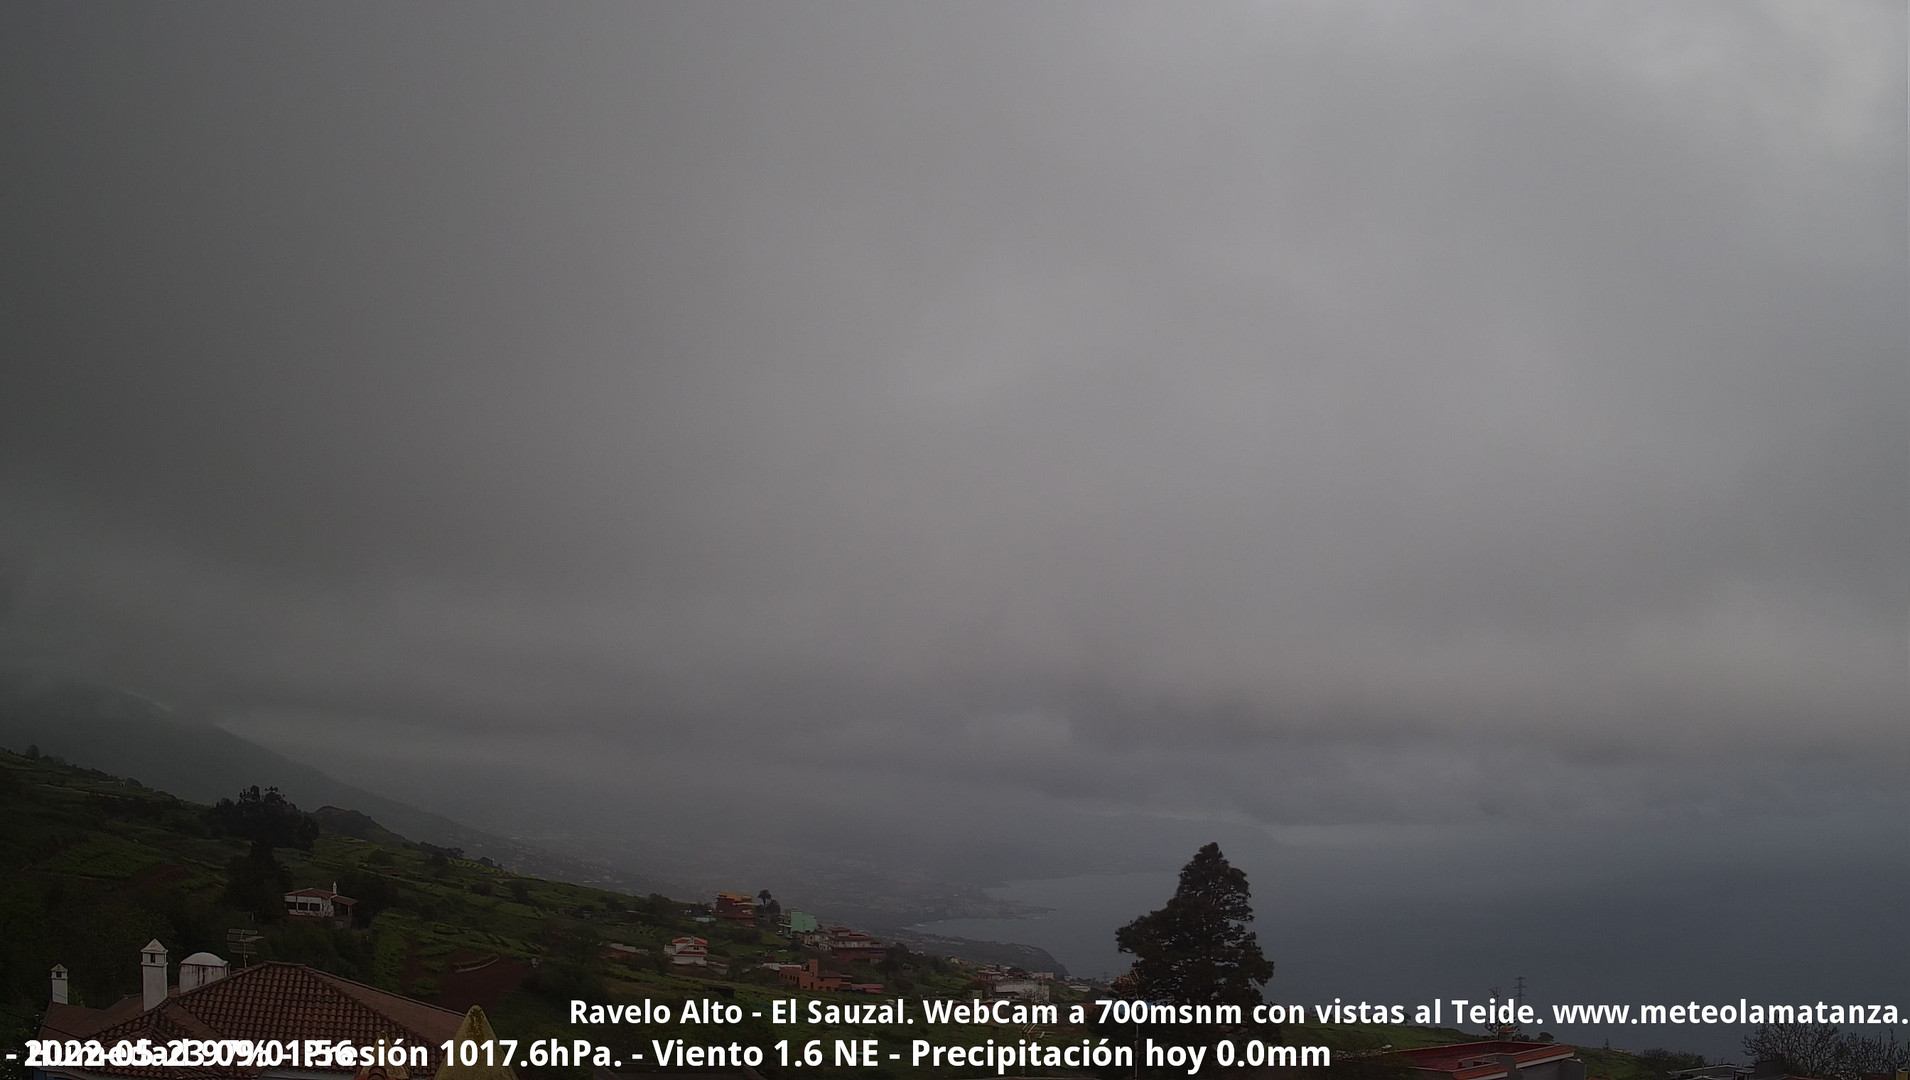 time-lapse frame, La Matanza - 1 webcam